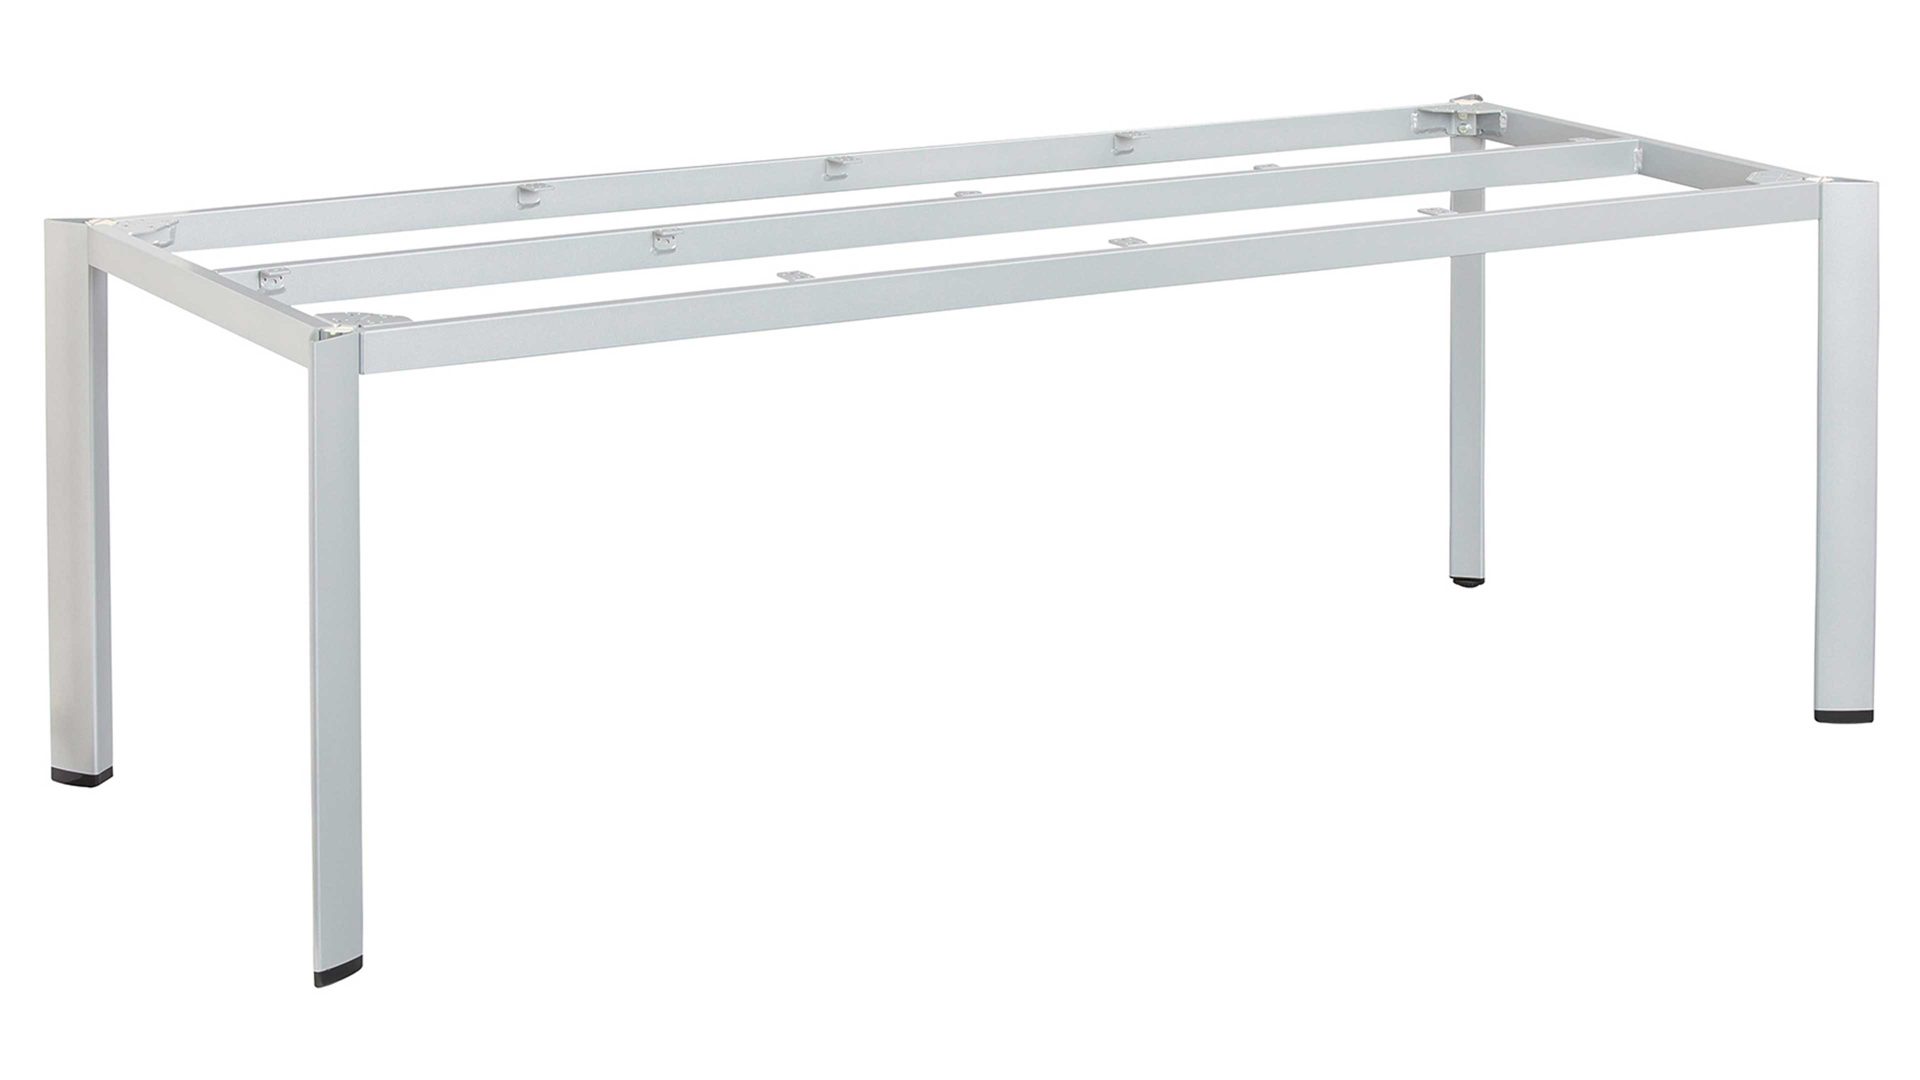 Gartentisch Kettler aus Metall in Silber KETTLER Tischgestell Serie Edge silberfarbenes Aluminium - ca. 220 x 95 cm